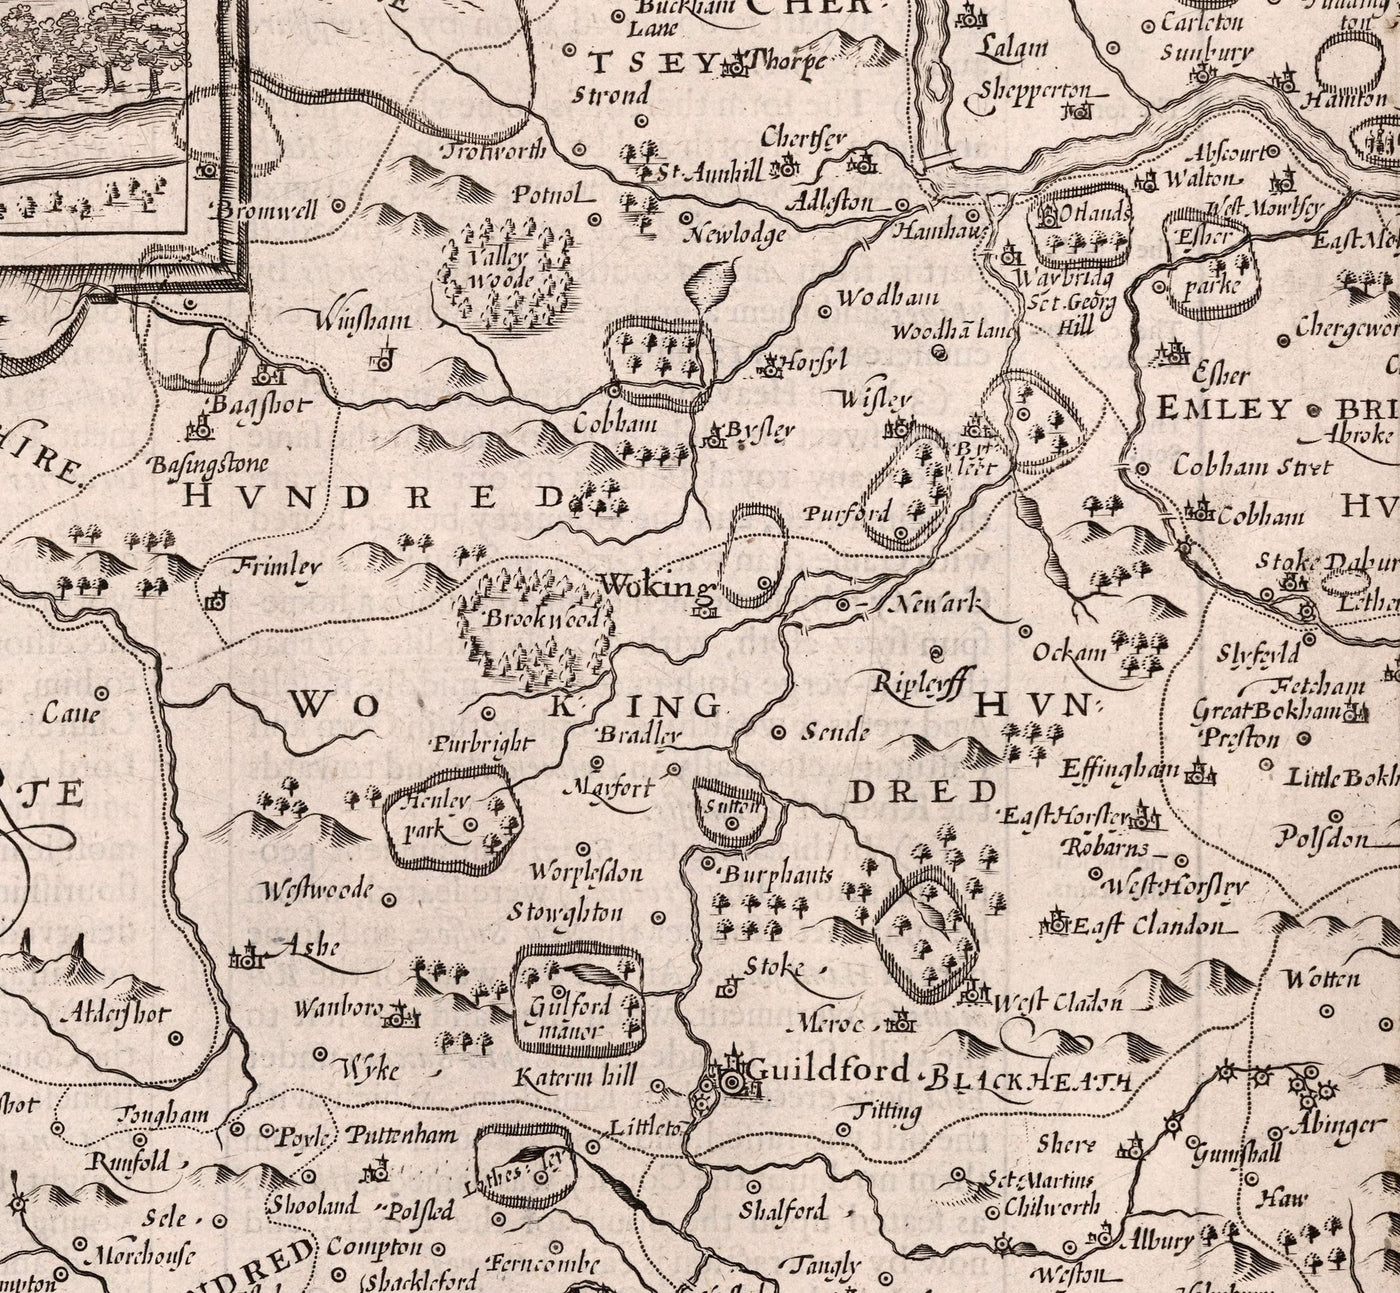 Viejo mapa de Surrey en 1611 por John Speed ​​- Woking, Guildford, Croydon, Richmond, Londres